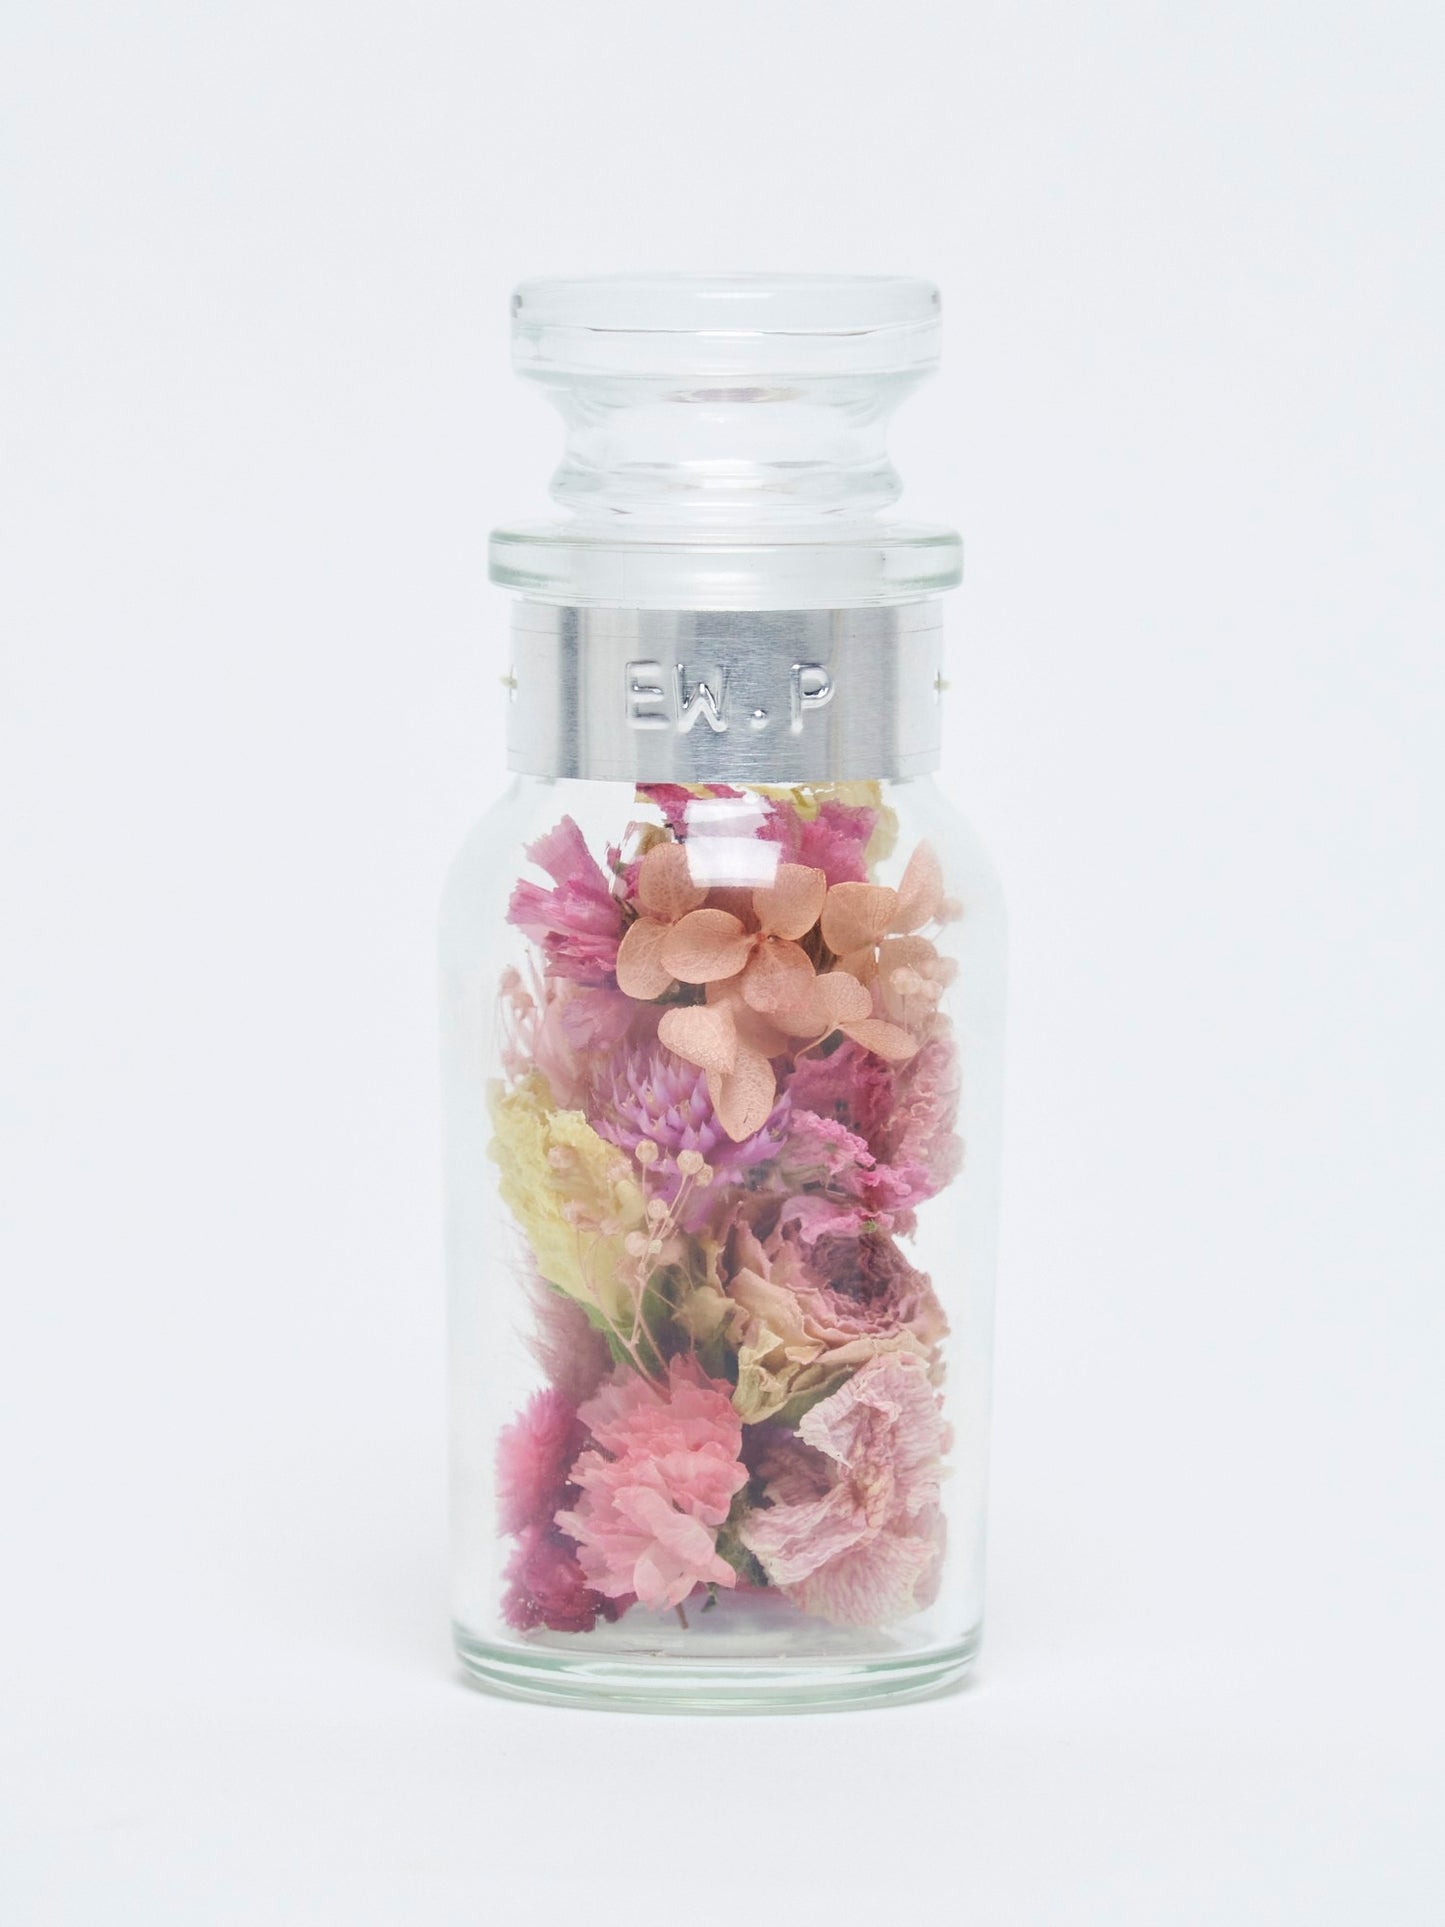 Flower language mini bottle "sweet pea"